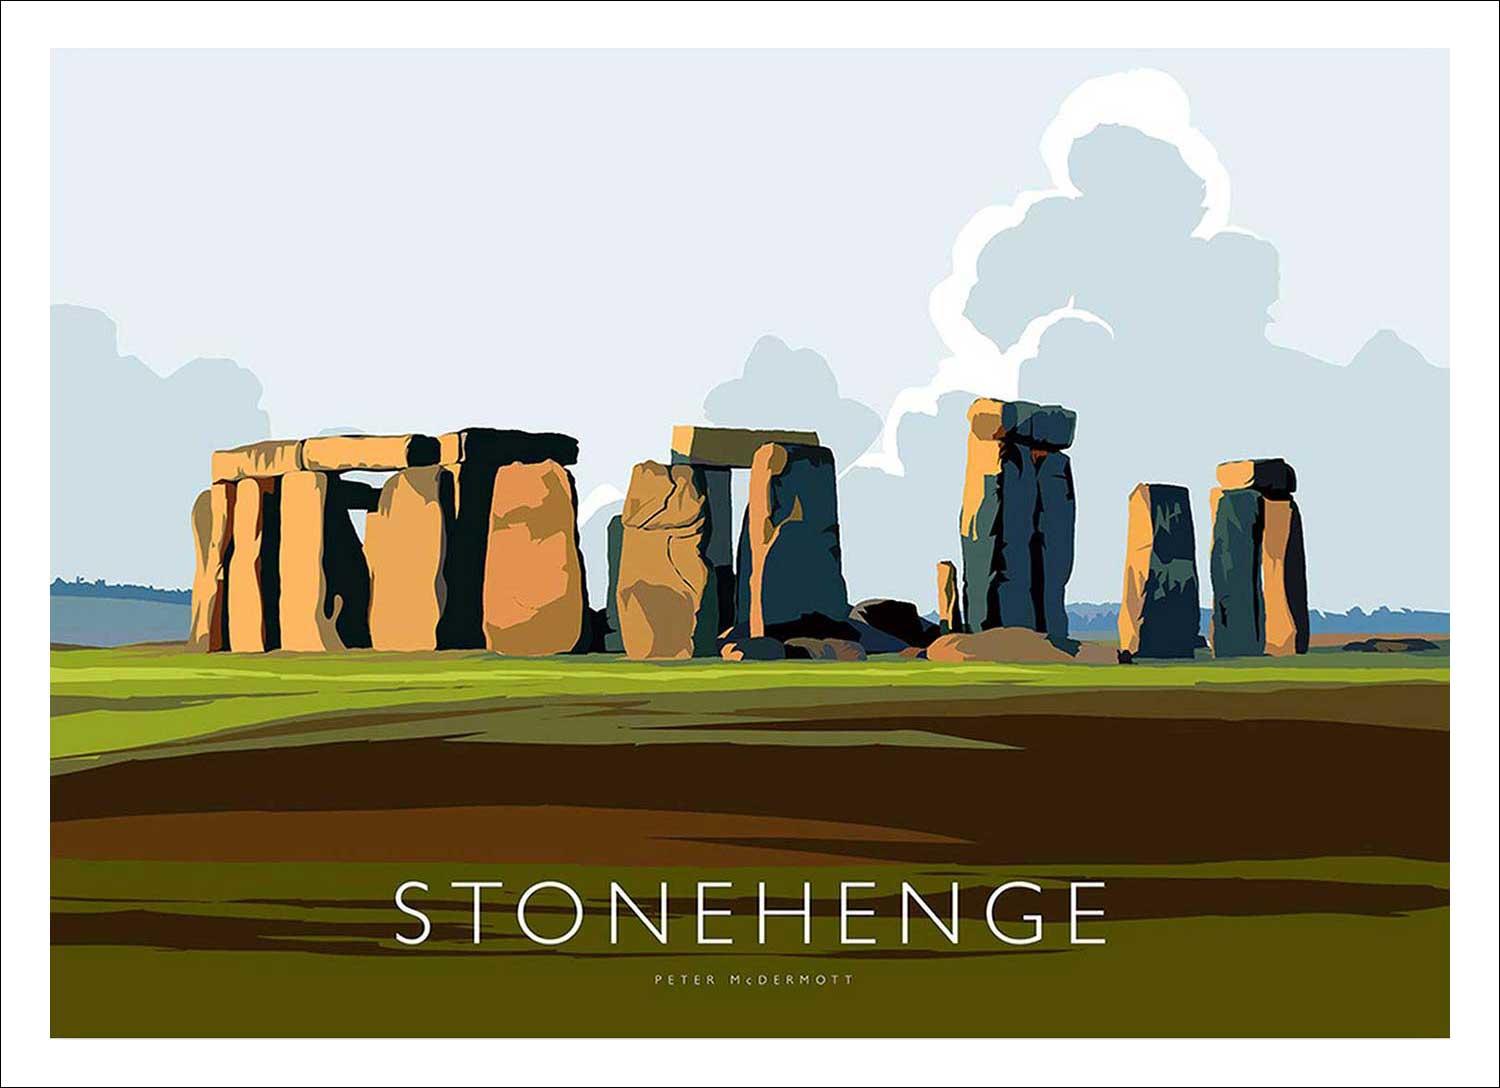 Stonehenge Art Print from an original illustration by artist Peter McDermott